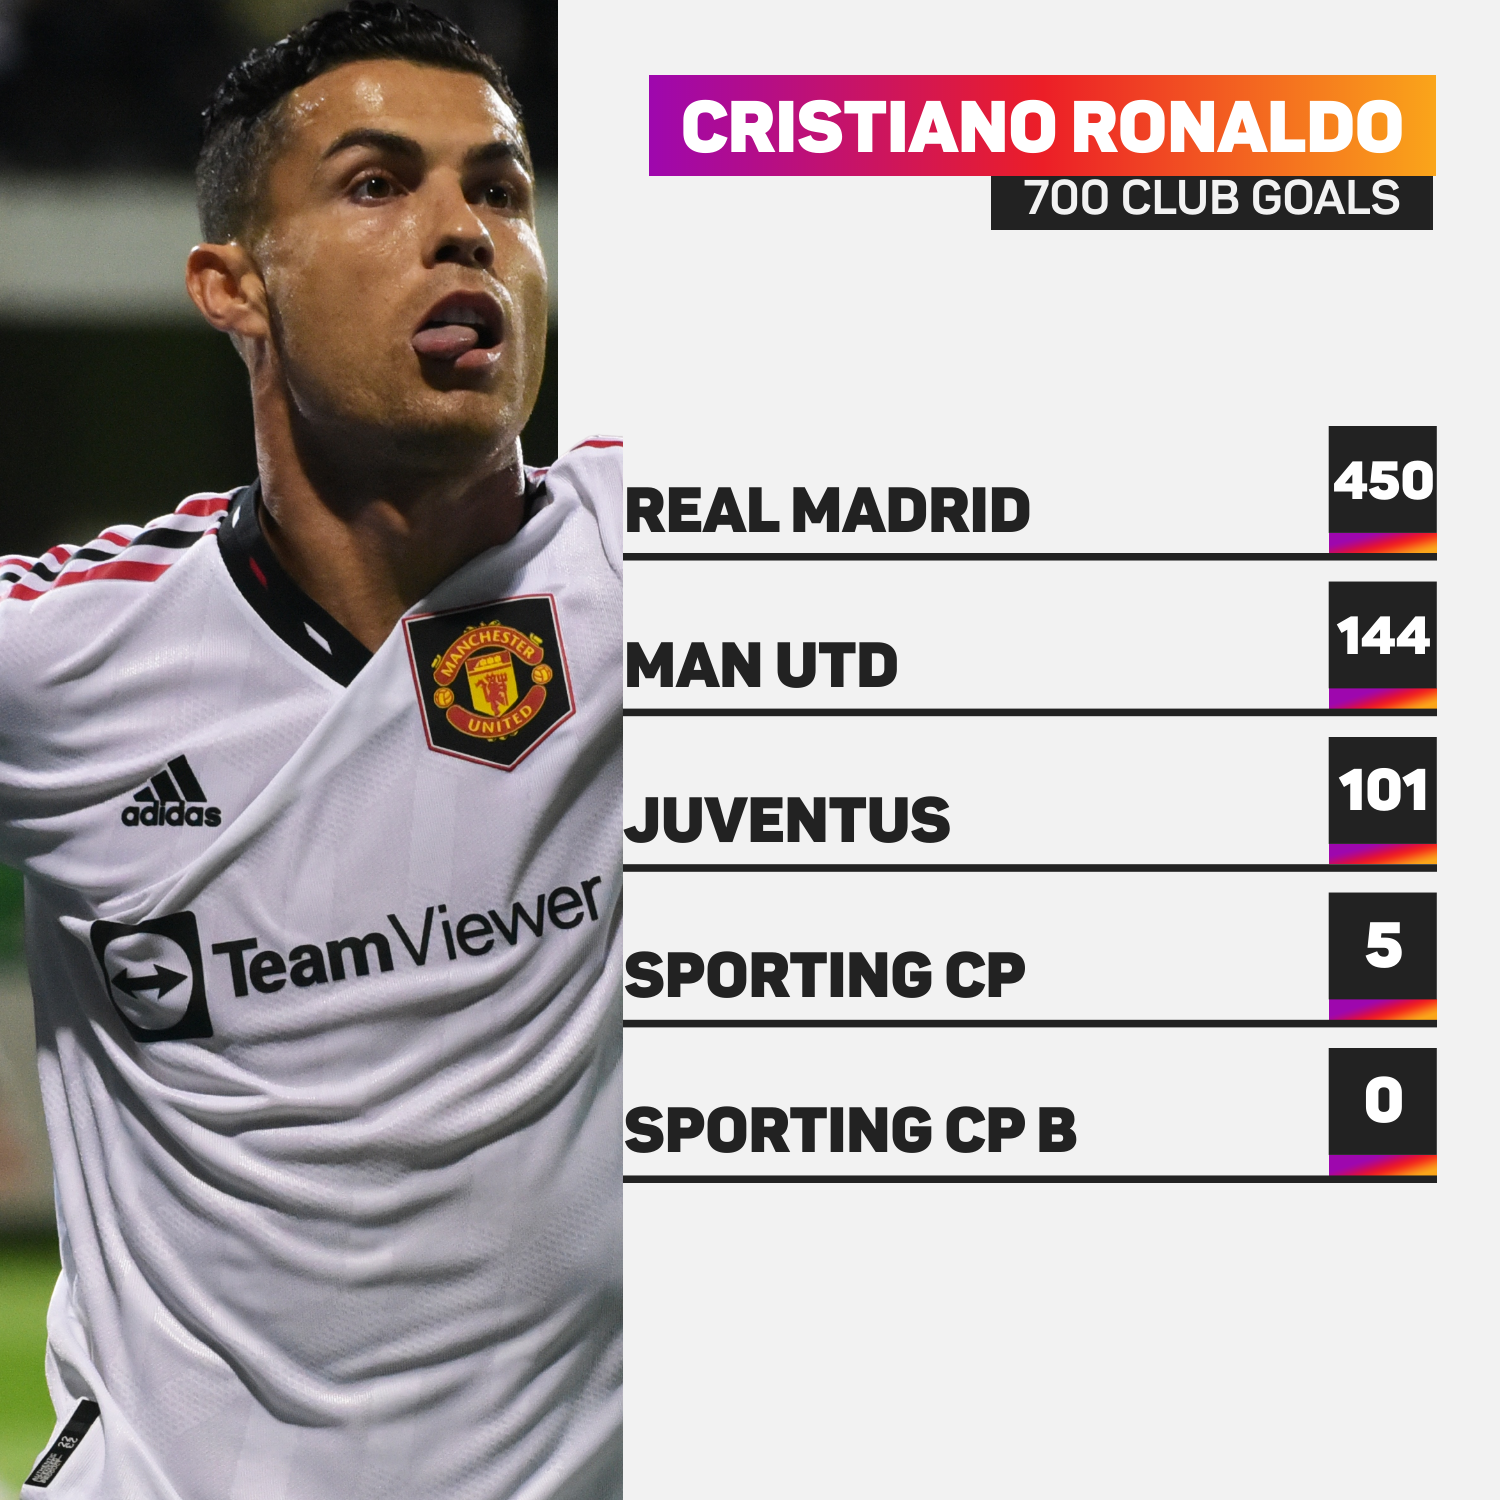 Cristiano Ronaldo's 700 club goals